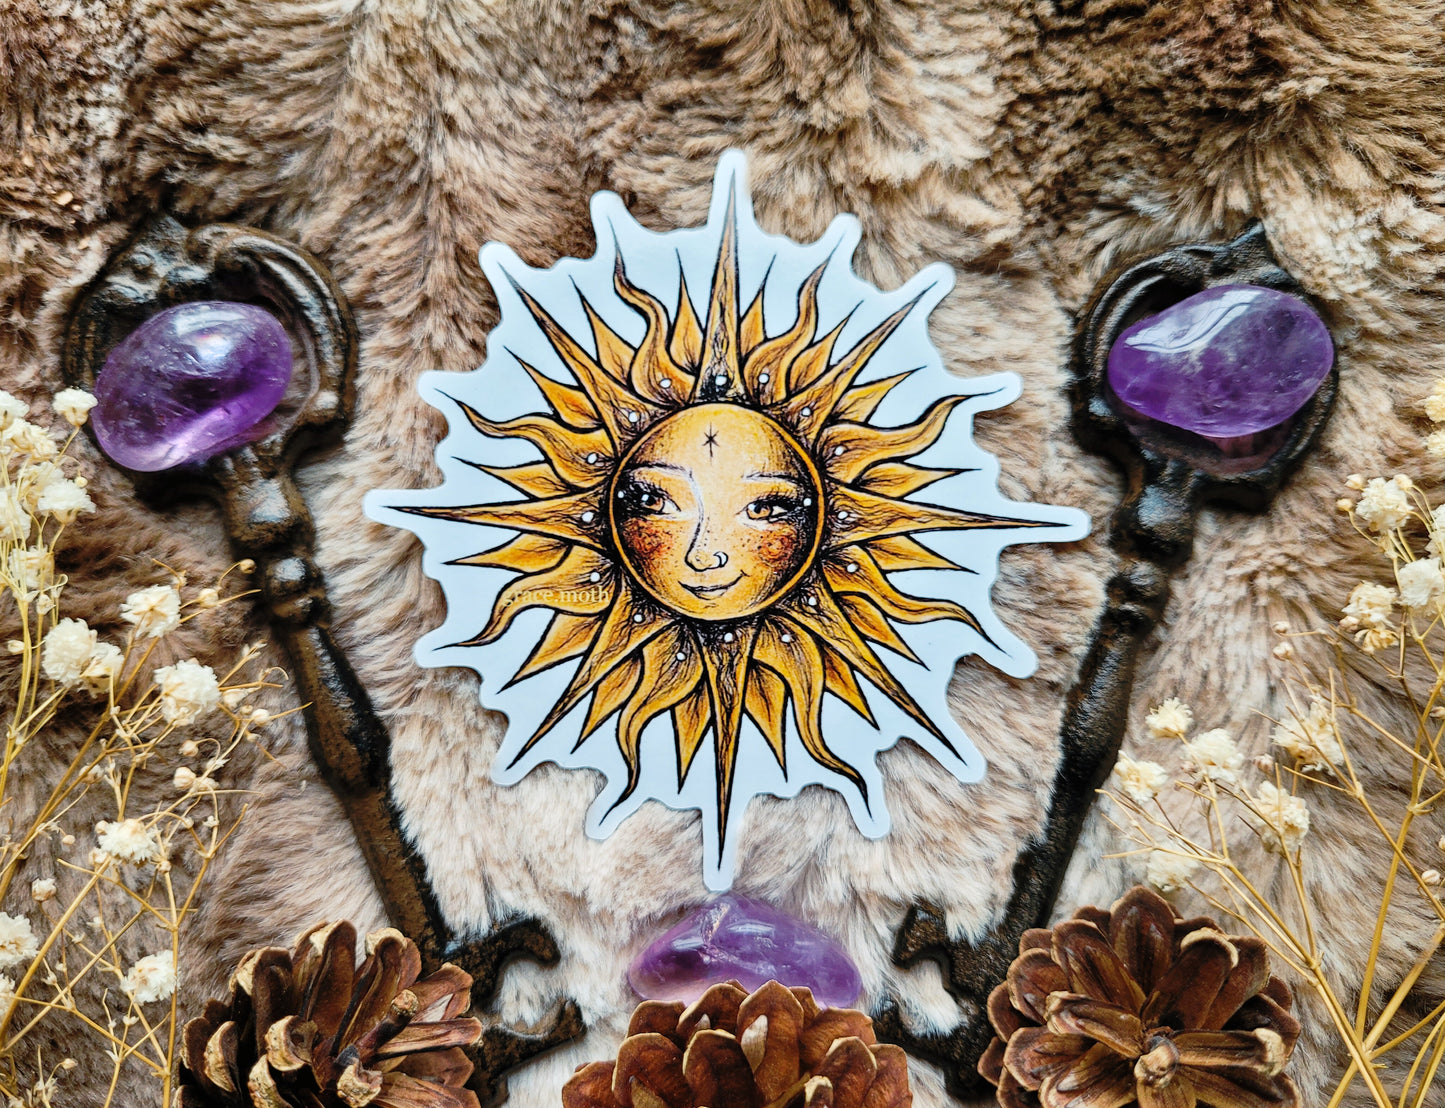 Sun Goddess - Vinyl Sticker 10cm - Witchy - Gothic - Illustrated by Grace moth